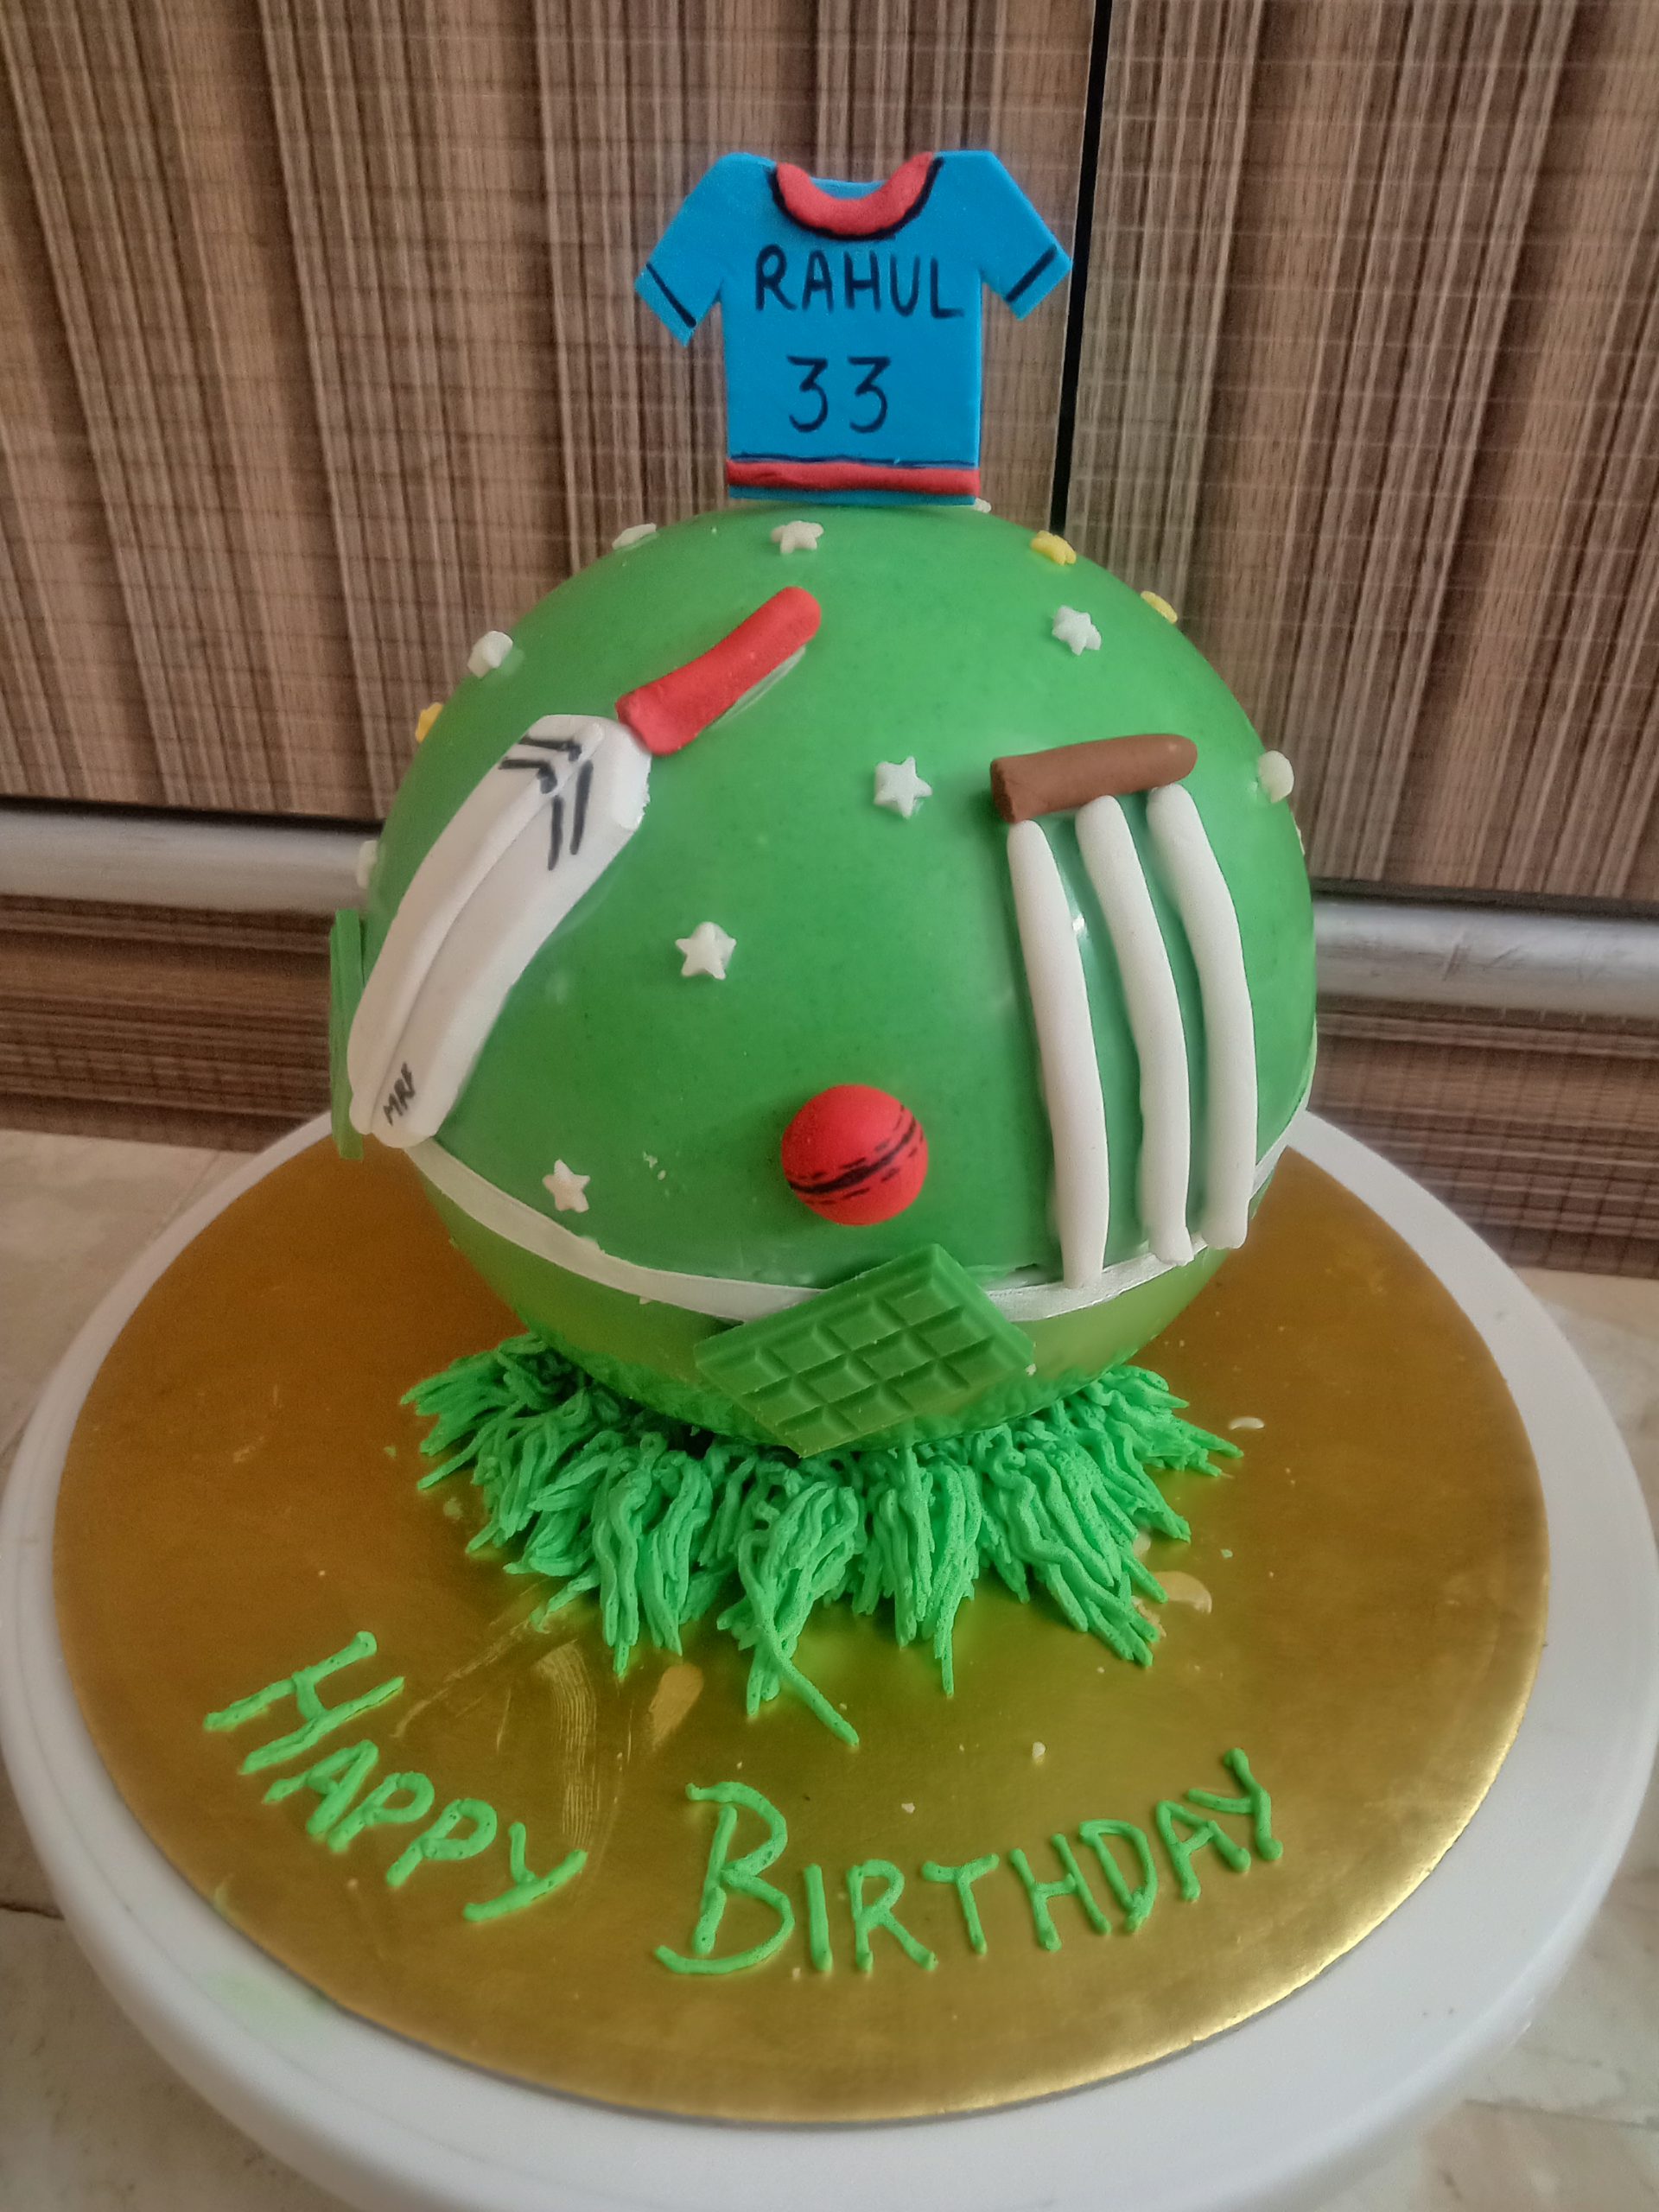 Pinata Cricket Theme Cake Designs, Images, Price Near Me